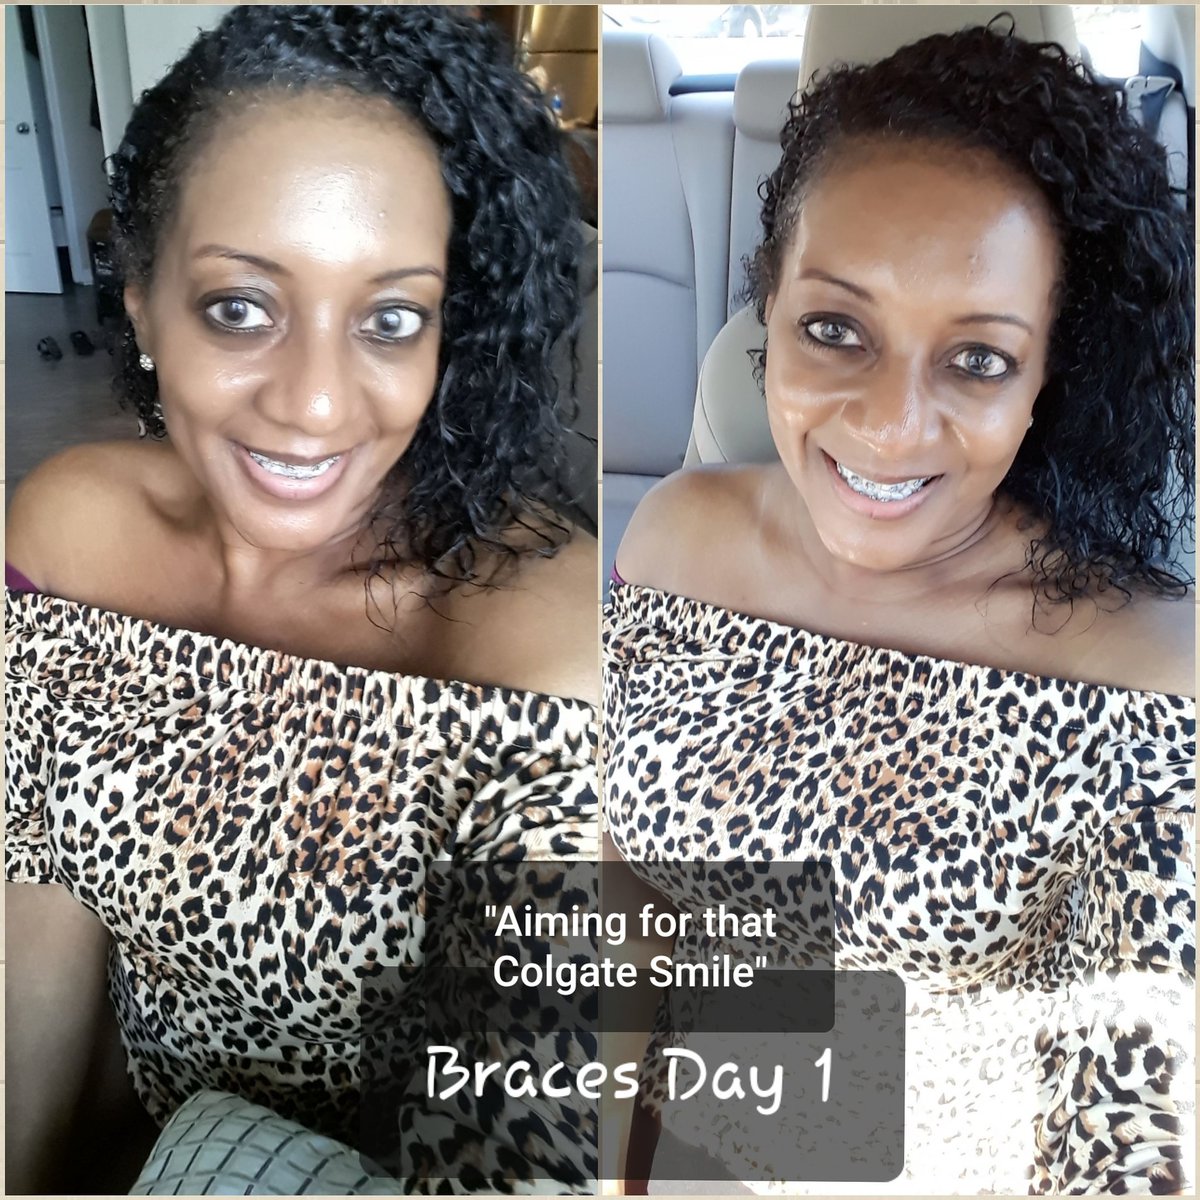 You're never too old to get braces. I'm Aiming for that Colgate Smile! Braces Day 1... #braces #adultbraces #dentist #orthodontist #teeth #smile #colgatesmile #traditionalbraces #metalbraces #oralhealth #health #orthodontics #igotbraces #dental #tooth #clearbraces #ceramicbraces